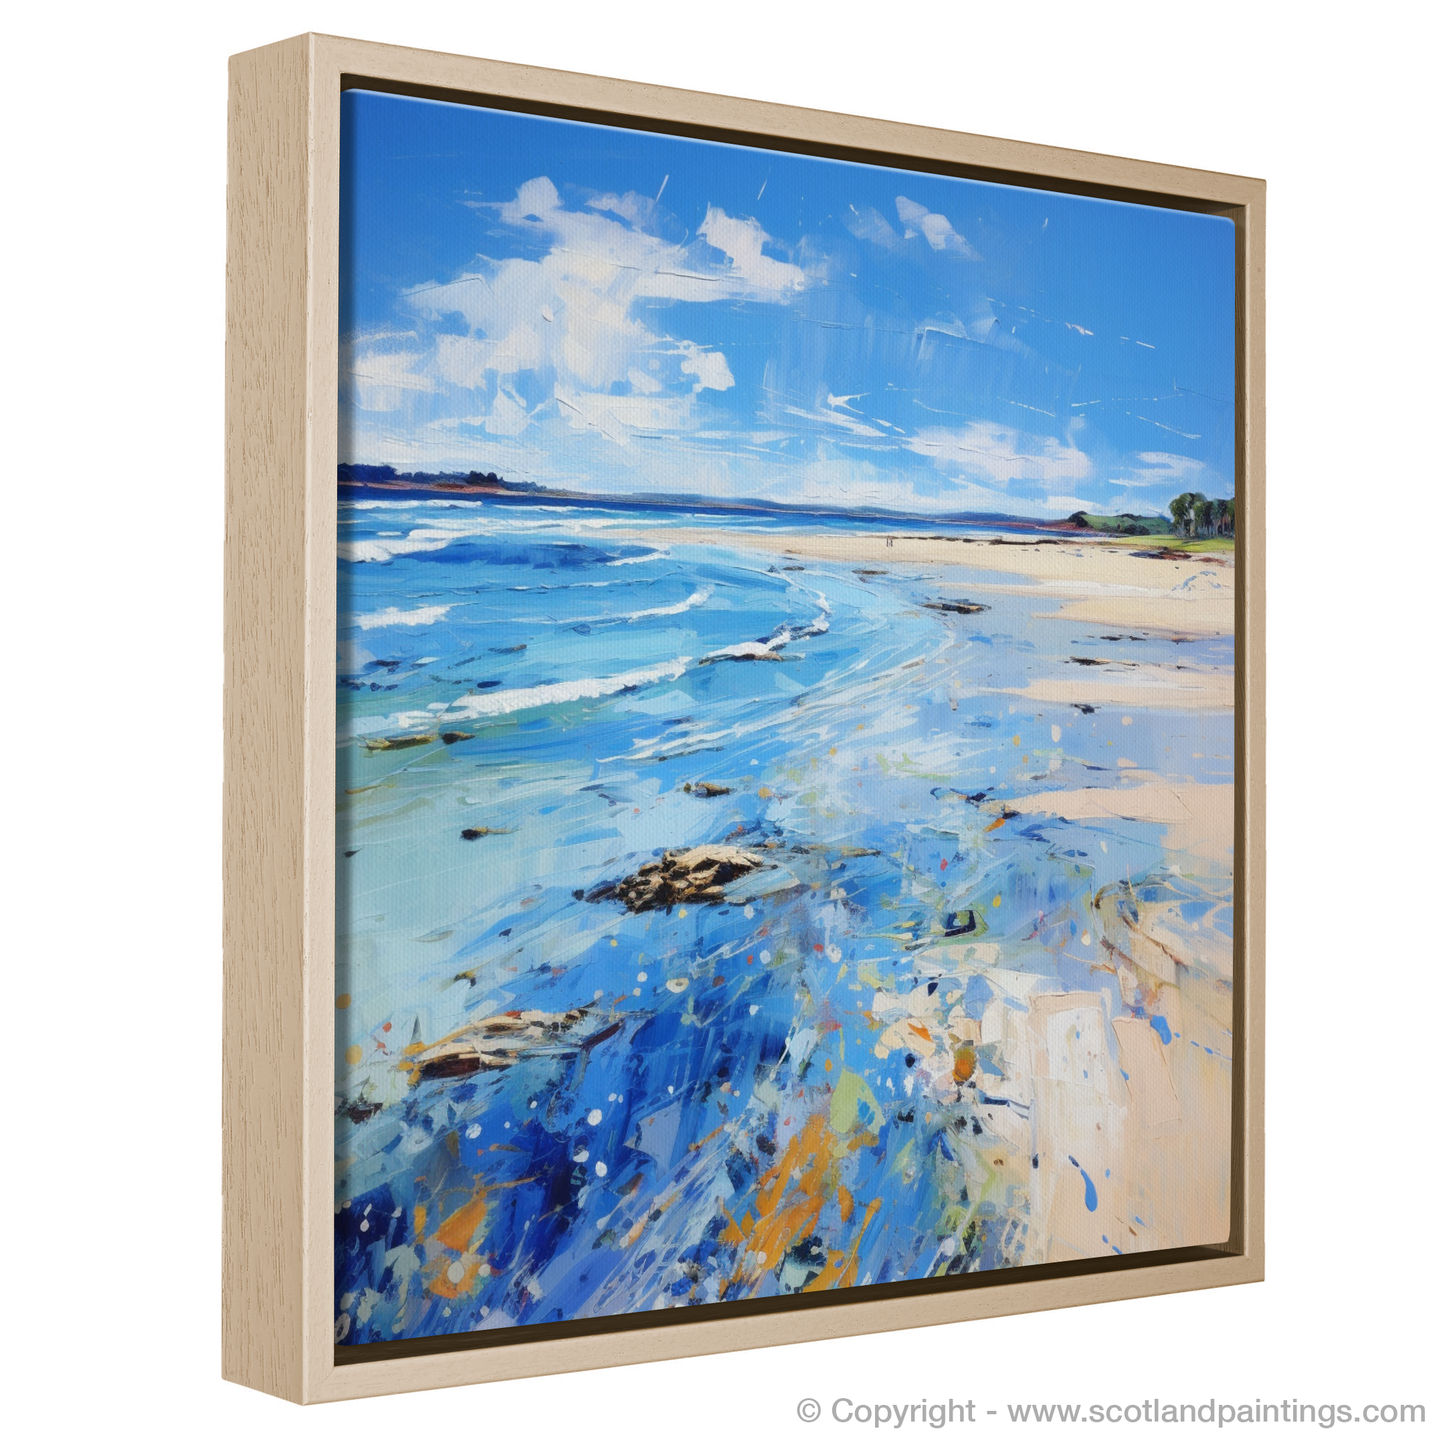 Painting and Art Print of Longniddry Beach, East Lothian in summer entitled "Summer Serenity at Longniddry Beach".